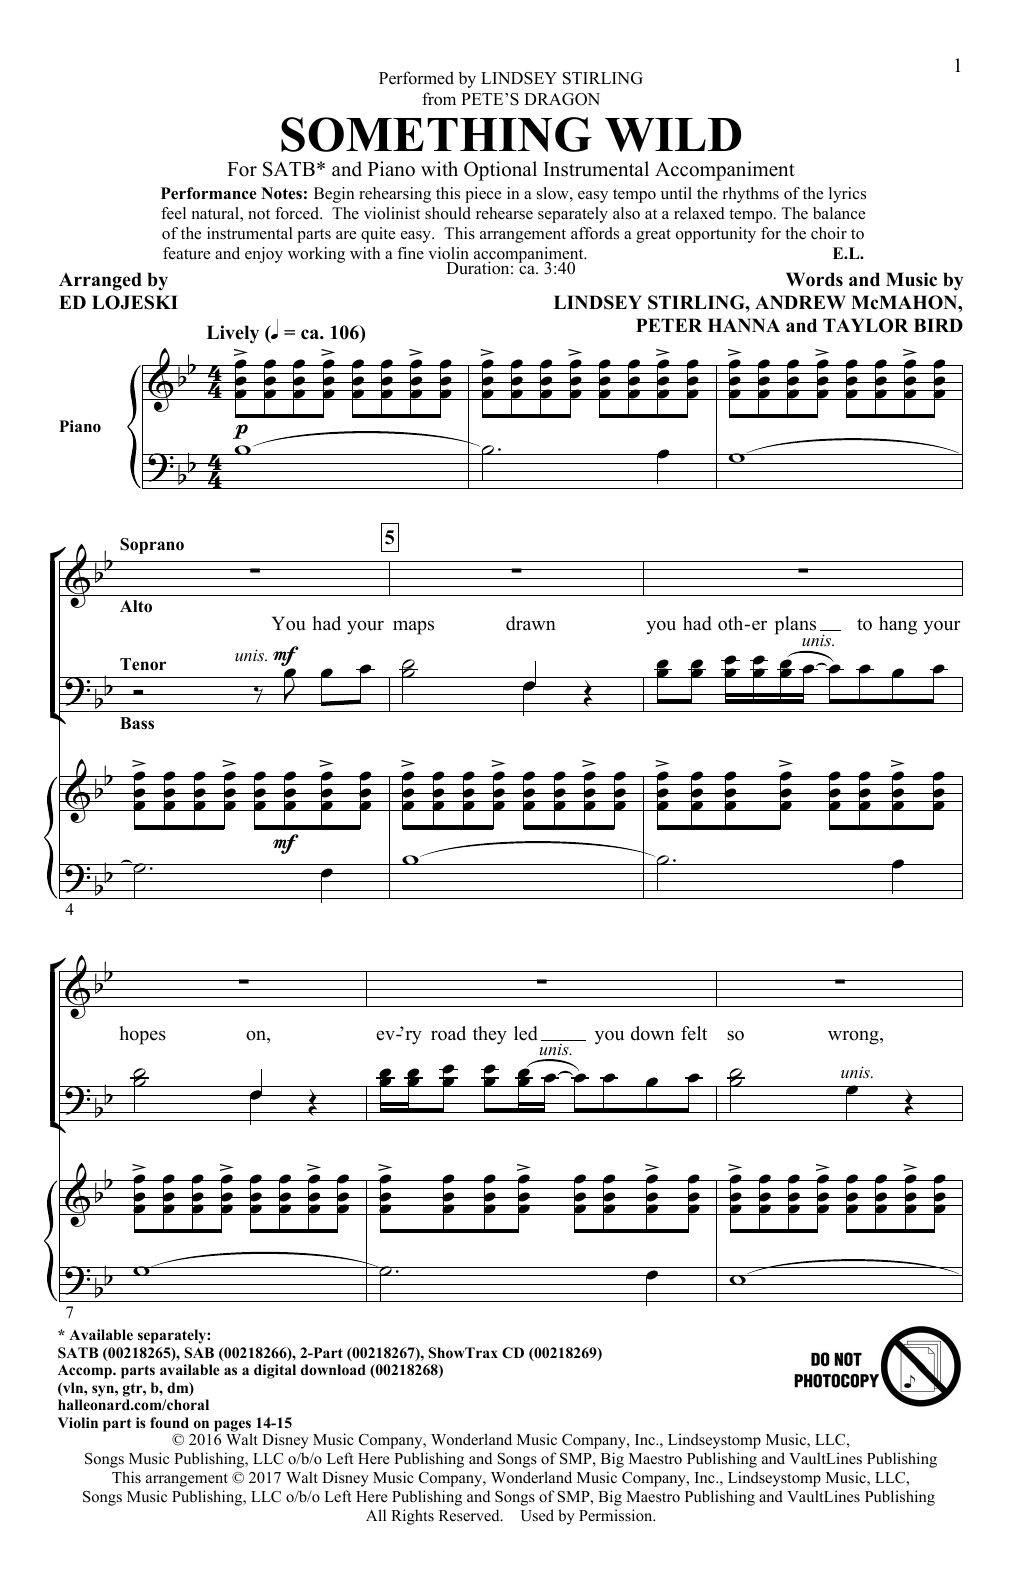 Lindsey Stirling Something Wild (arr. Ed Lojeski) Sheet Music Notes & Chords for SAB - Download or Print PDF